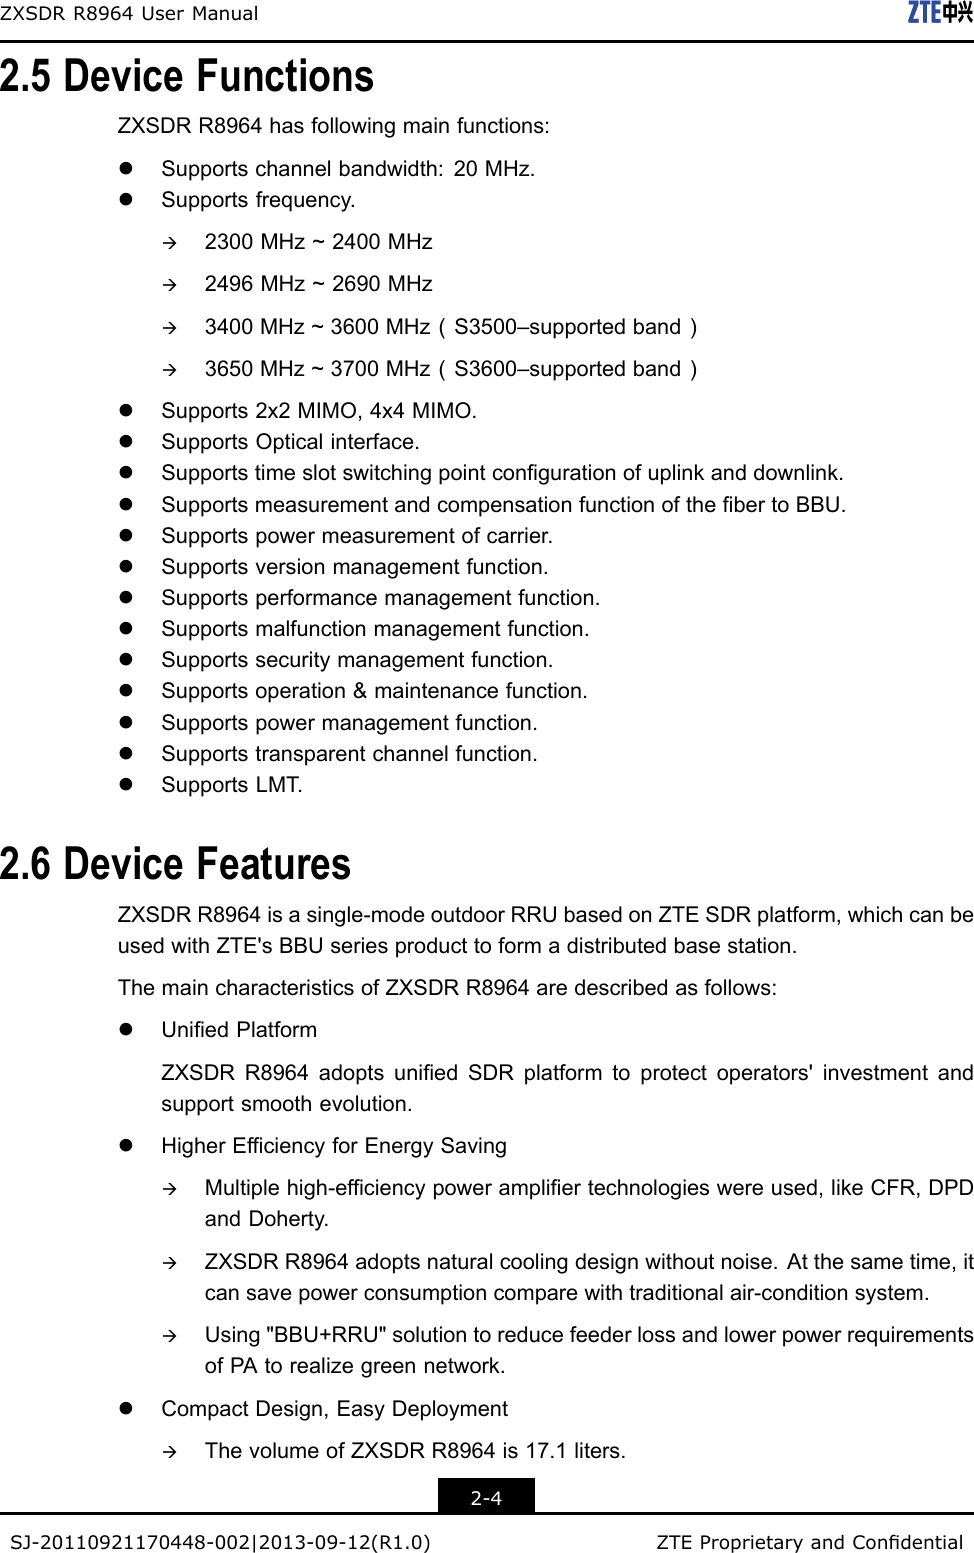 ZXSDRR8964UserManual2.5DeviceFunctionsZXSDRR8964hasfollowingmainfunctions:lSupportschannelbandwidth:20MHz.lSupportsfrequency.à2300MHz~2400MHzà2496MHz~2690MHzà3400MHz~3600MHz（S3500–supportedband）à3650MHz~3700MHz（S3600–supportedband）lSupports2x2MIMO,4x4MIMO.lSupportsOpticalinterface.lSupportstimeslotswitchingpointcongurationofuplinkanddownlink.lSupportsmeasurementandcompensationfunctionofthebertoBBU.lSupportspowermeasurementofcarrier.lSupportsversionmanagementfunction.lSupportsperformancemanagementfunction.lSupportsmalfunctionmanagementfunction.lSupportssecuritymanagementfunction.lSupportsoperation&amp;maintenancefunction.lSupportspowermanagementfunction.lSupportstransparentchannelfunction.lSupportsLMT.2.6DeviceFeaturesZXSDRR8964isasingle-modeoutdoorRRUbasedonZTESDRplatform,whichcanbeusedwithZTE&apos;sBBUseriesproducttoformadistributedbasestation.ThemaincharacteristicsofZXSDRR8964aredescribedasfollows:lUniedPlatformZXSDRR8964adoptsuniedSDRplatformtoprotectoperators&apos;investmentandsupportsmoothevolution.lHigherEfciencyforEnergySavingàMultiplehigh-efciencypowerampliertechnologieswereused,likeCFR,DPDandDoherty.àZXSDRR8964adoptsnaturalcoolingdesignwithoutnoise.Atthesametime,itcansavepowerconsumptioncomparewithtraditionalair-conditionsystem.àUsing&quot;BBU+RRU&quot;solutiontoreducefeederlossandlowerpowerrequirementsofPAtorealizegreennetwork.lCompactDesign,EasyDeploymentàThevolumeofZXSDRR8964is17.1liters.2-4SJ-20110921170448-002|2013-09-12(R1.0)ZTEProprietaryandCondential